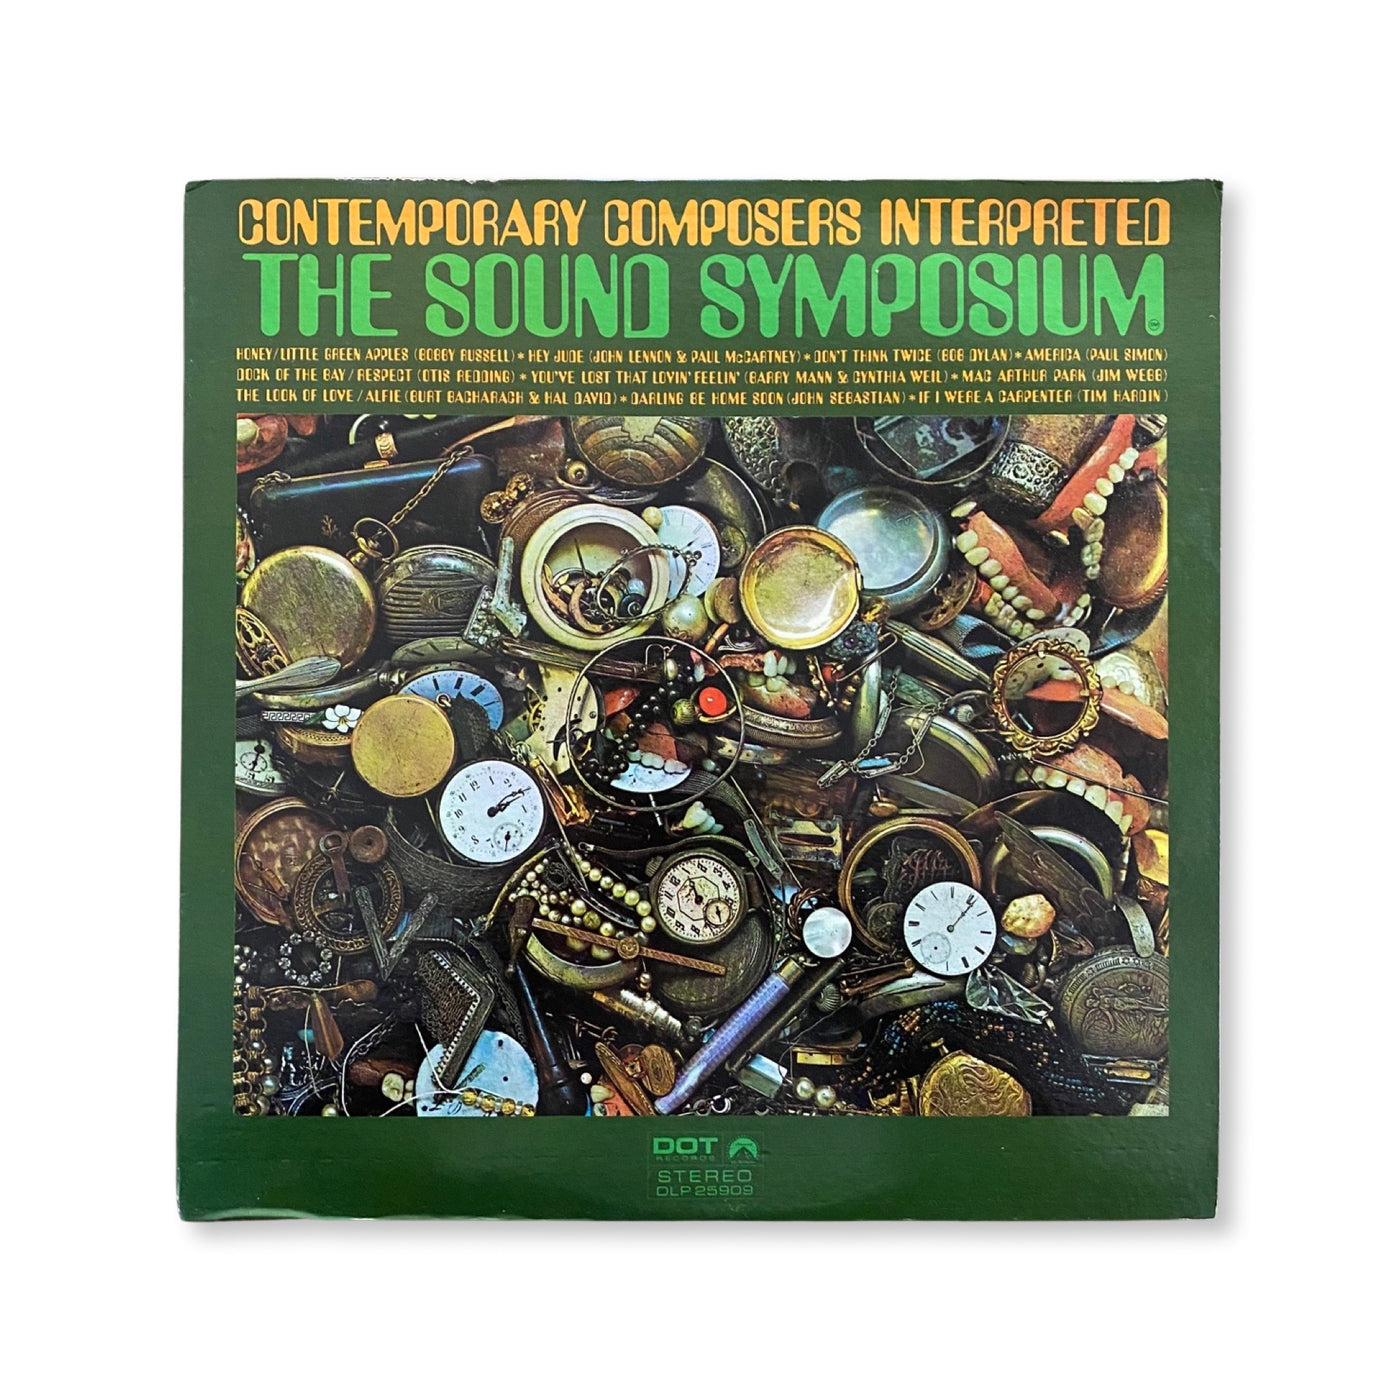 The Sound Symposium - Contemporary Composers Interpreted